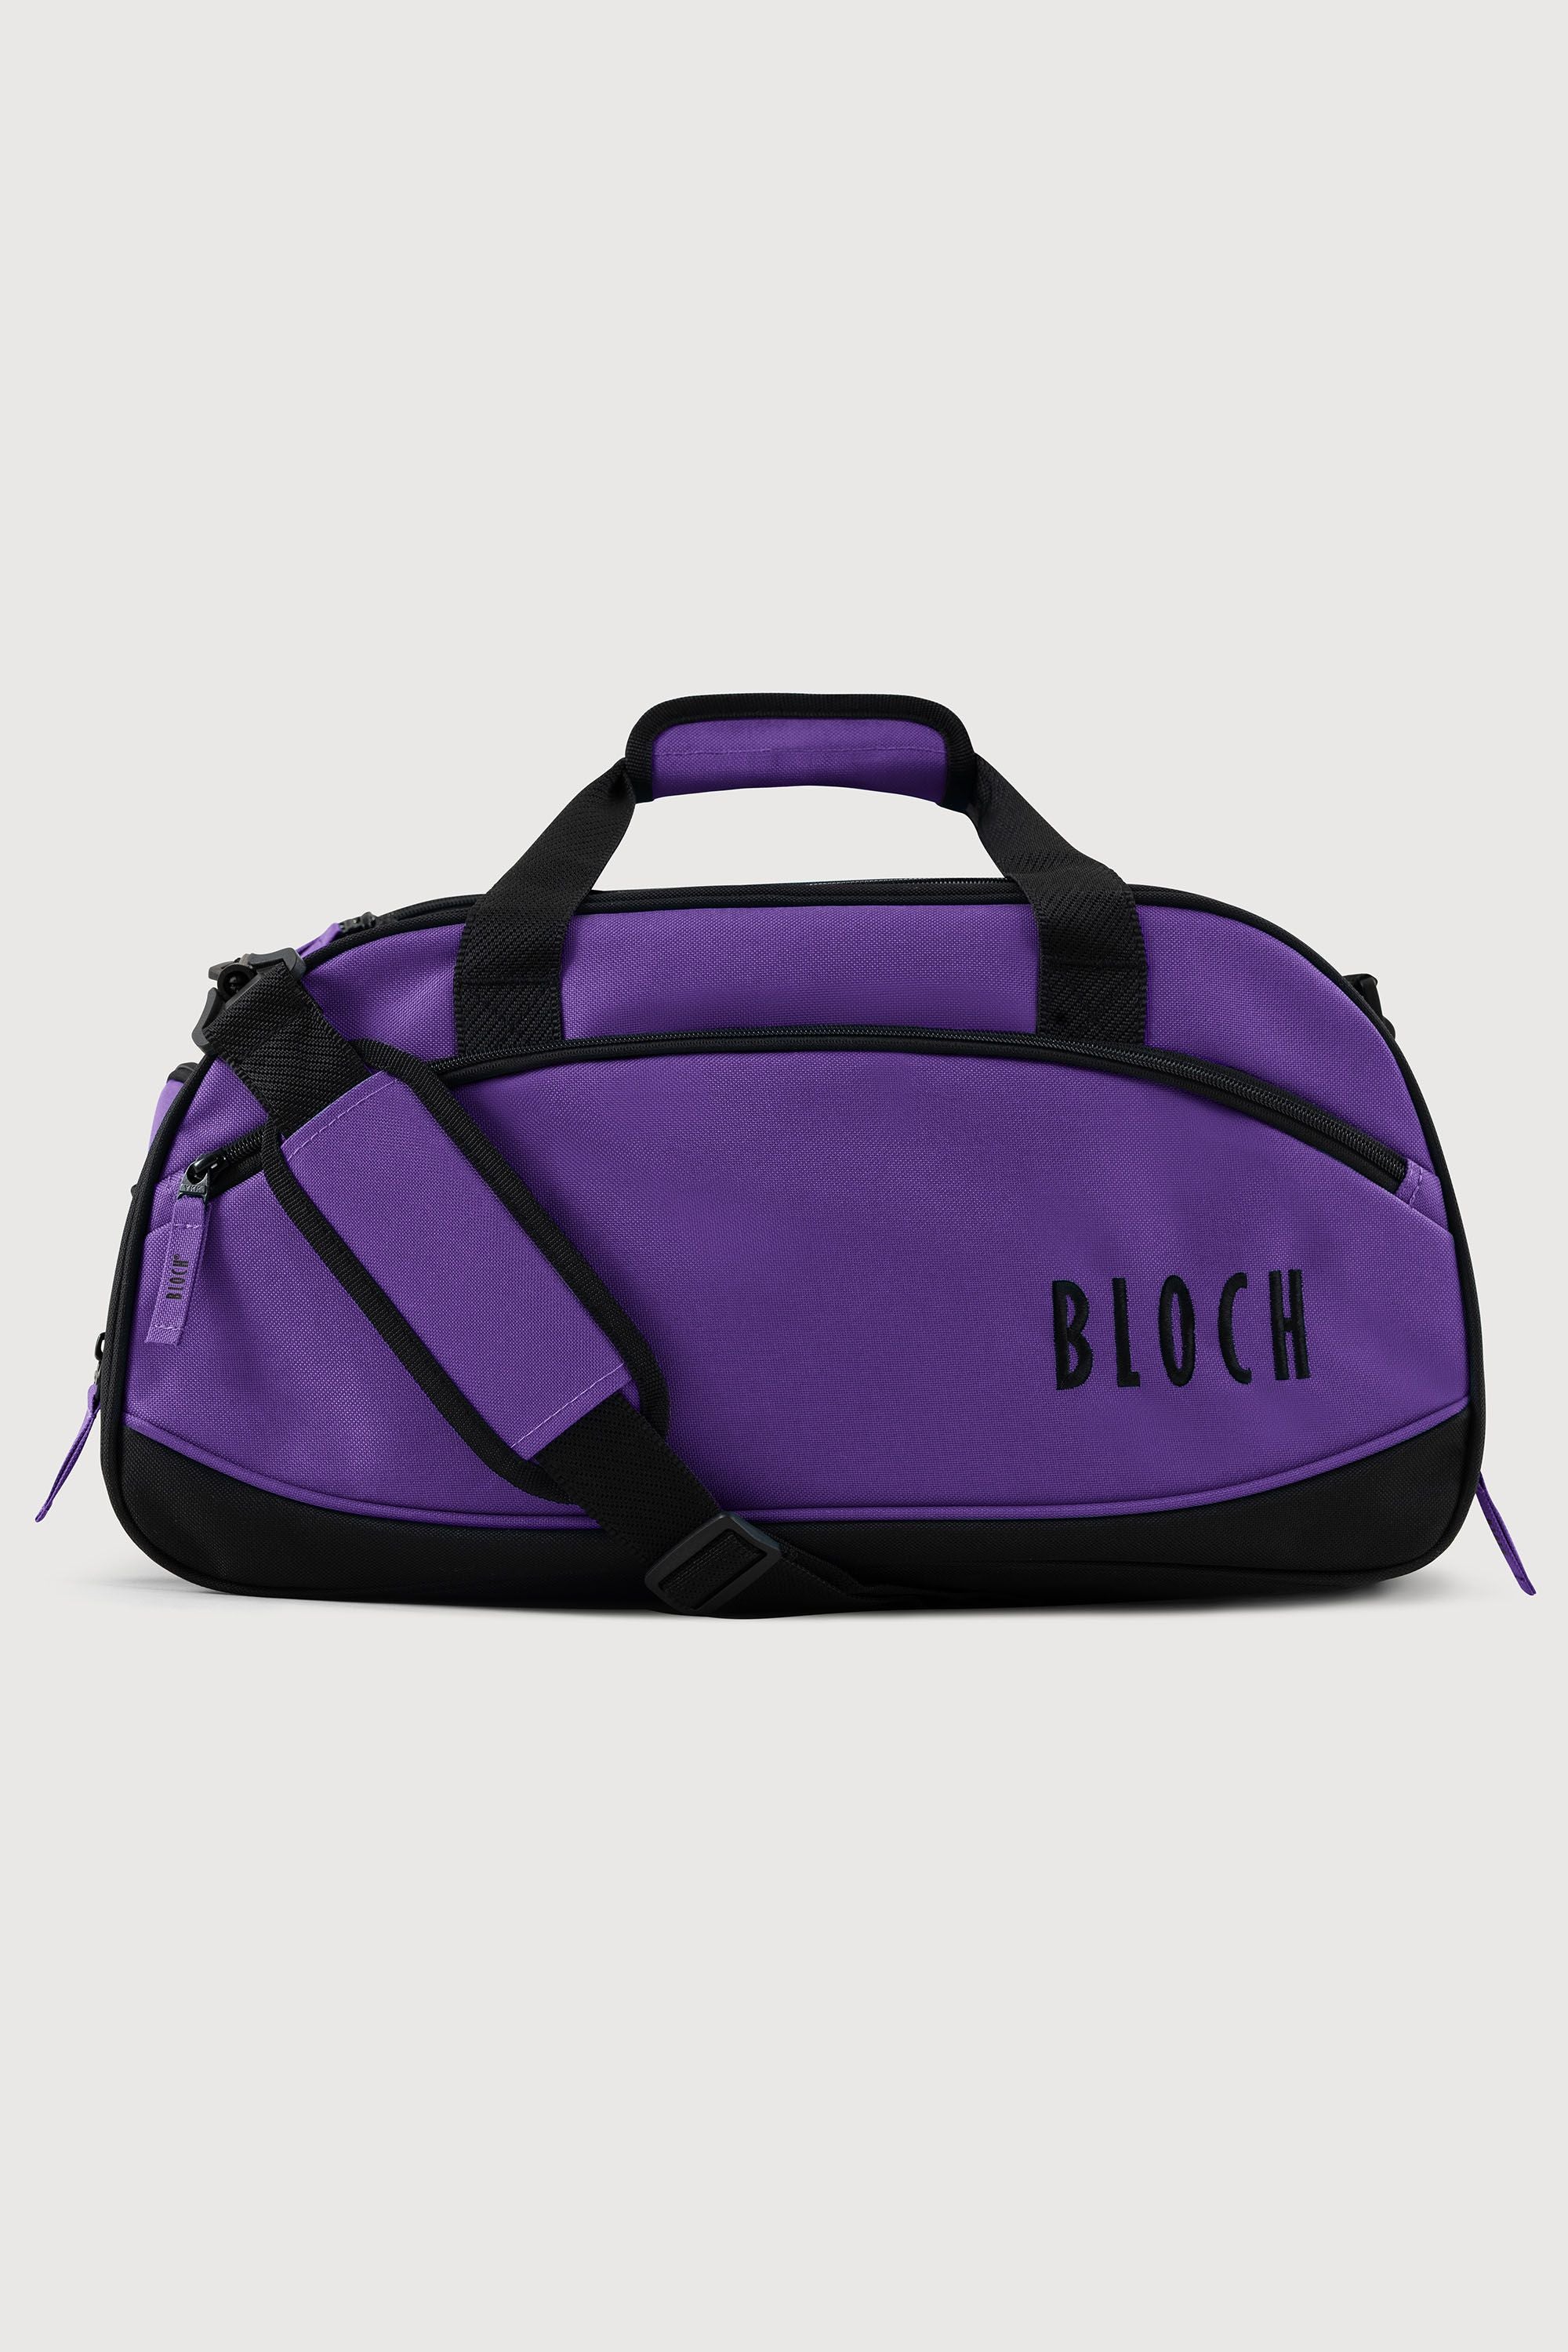 Bloch Two Tone Dance Bag, Purple/Black Nylon